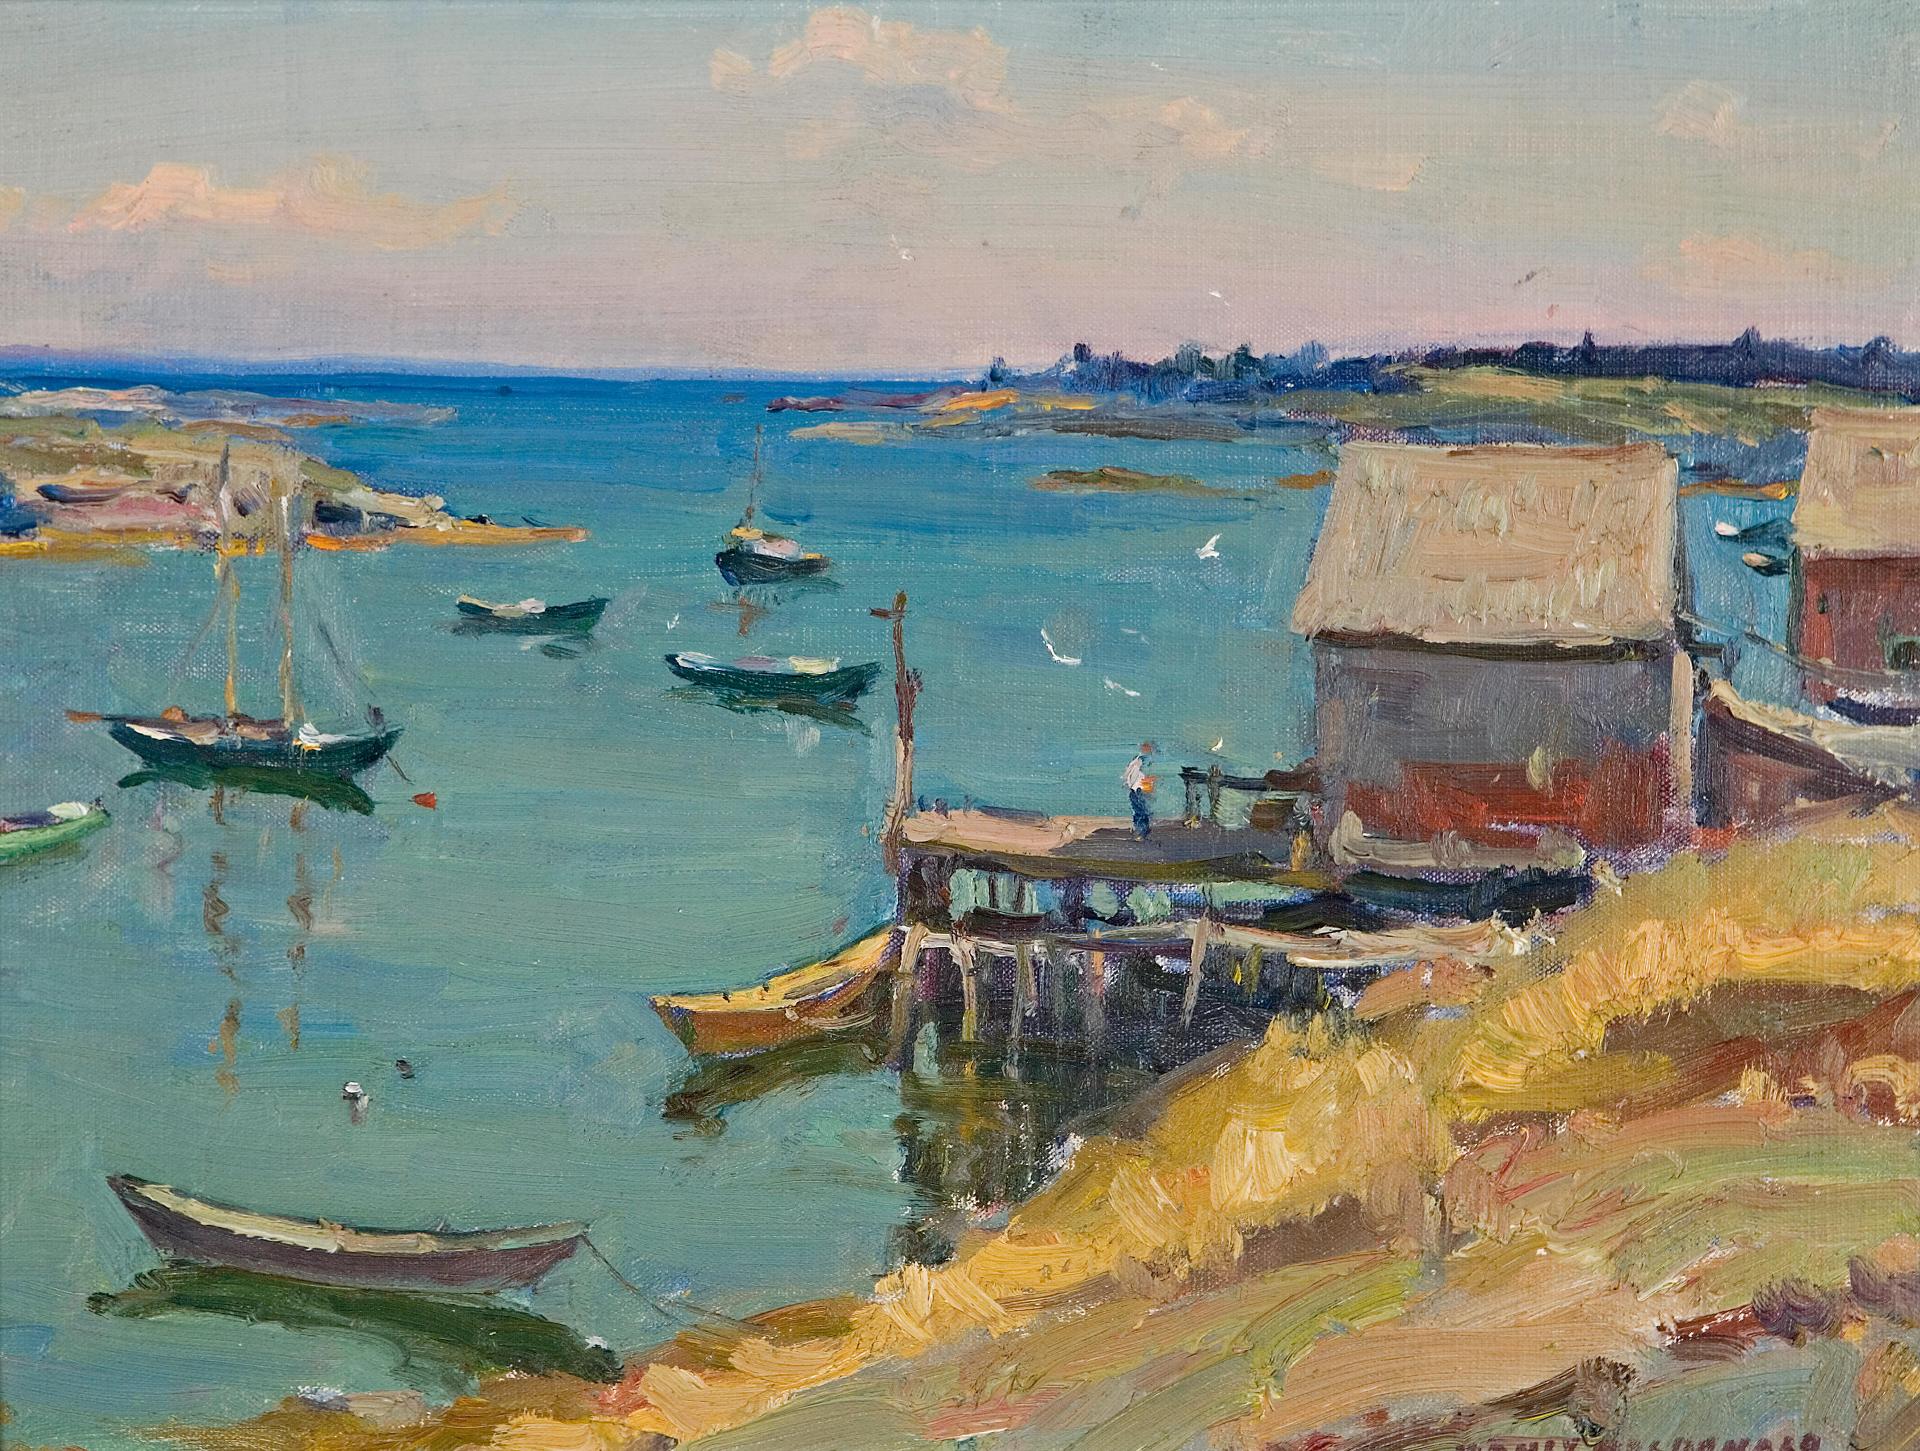 Manly Edward MacDonald (1889-1971) - Boats in bay